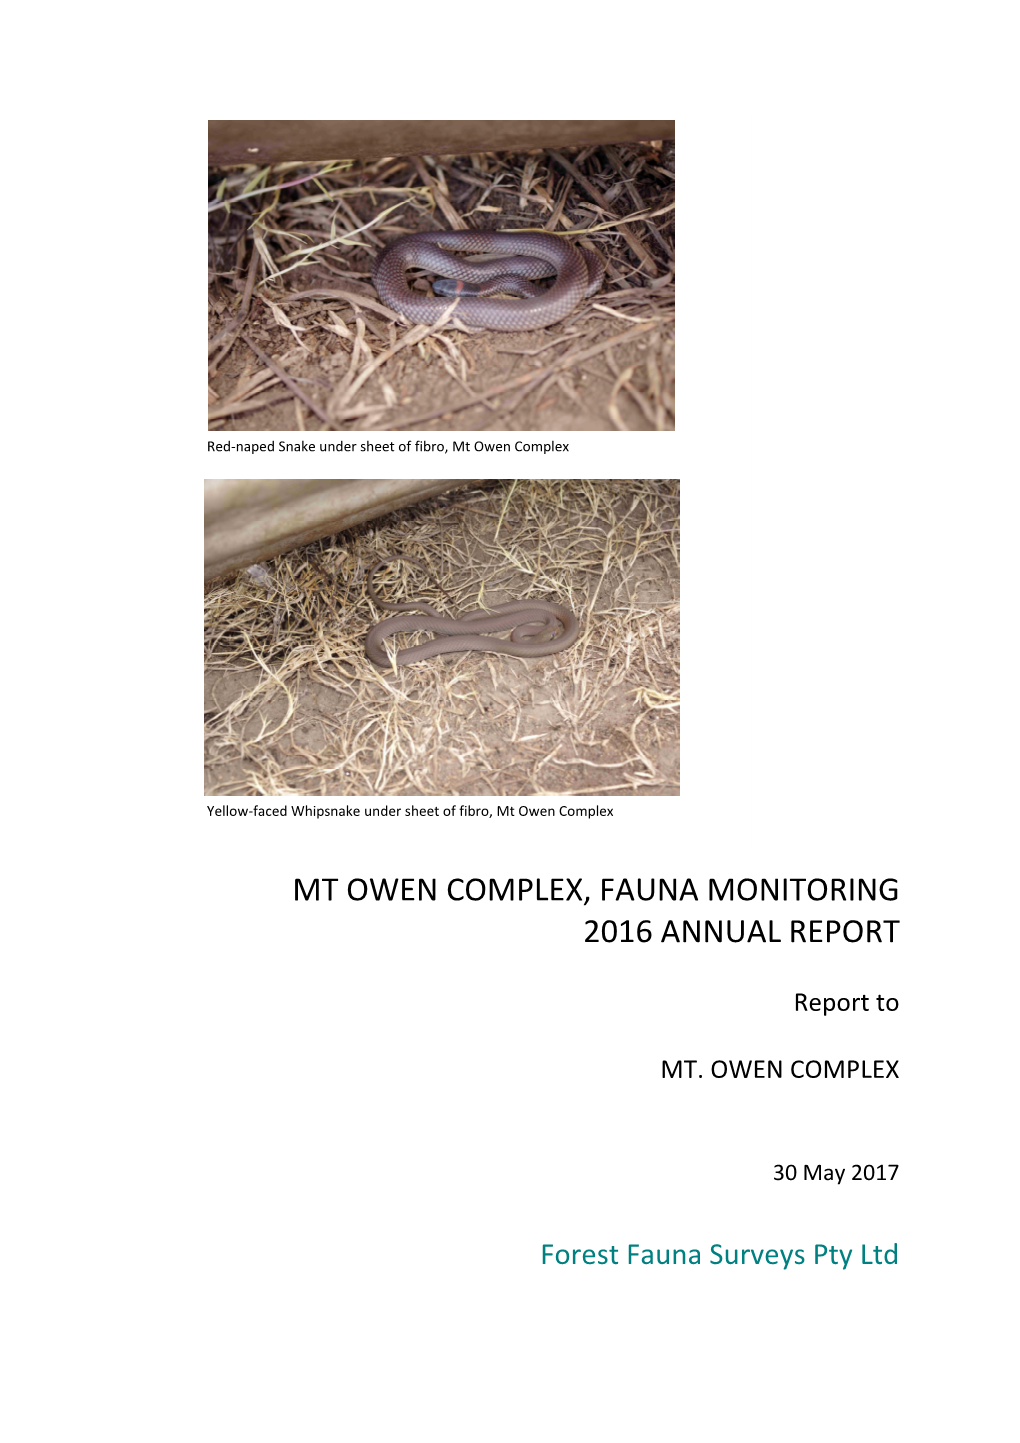 Mt Owen Complex Fauna Monitoring 2016 Annual Report.0 2017.05.30